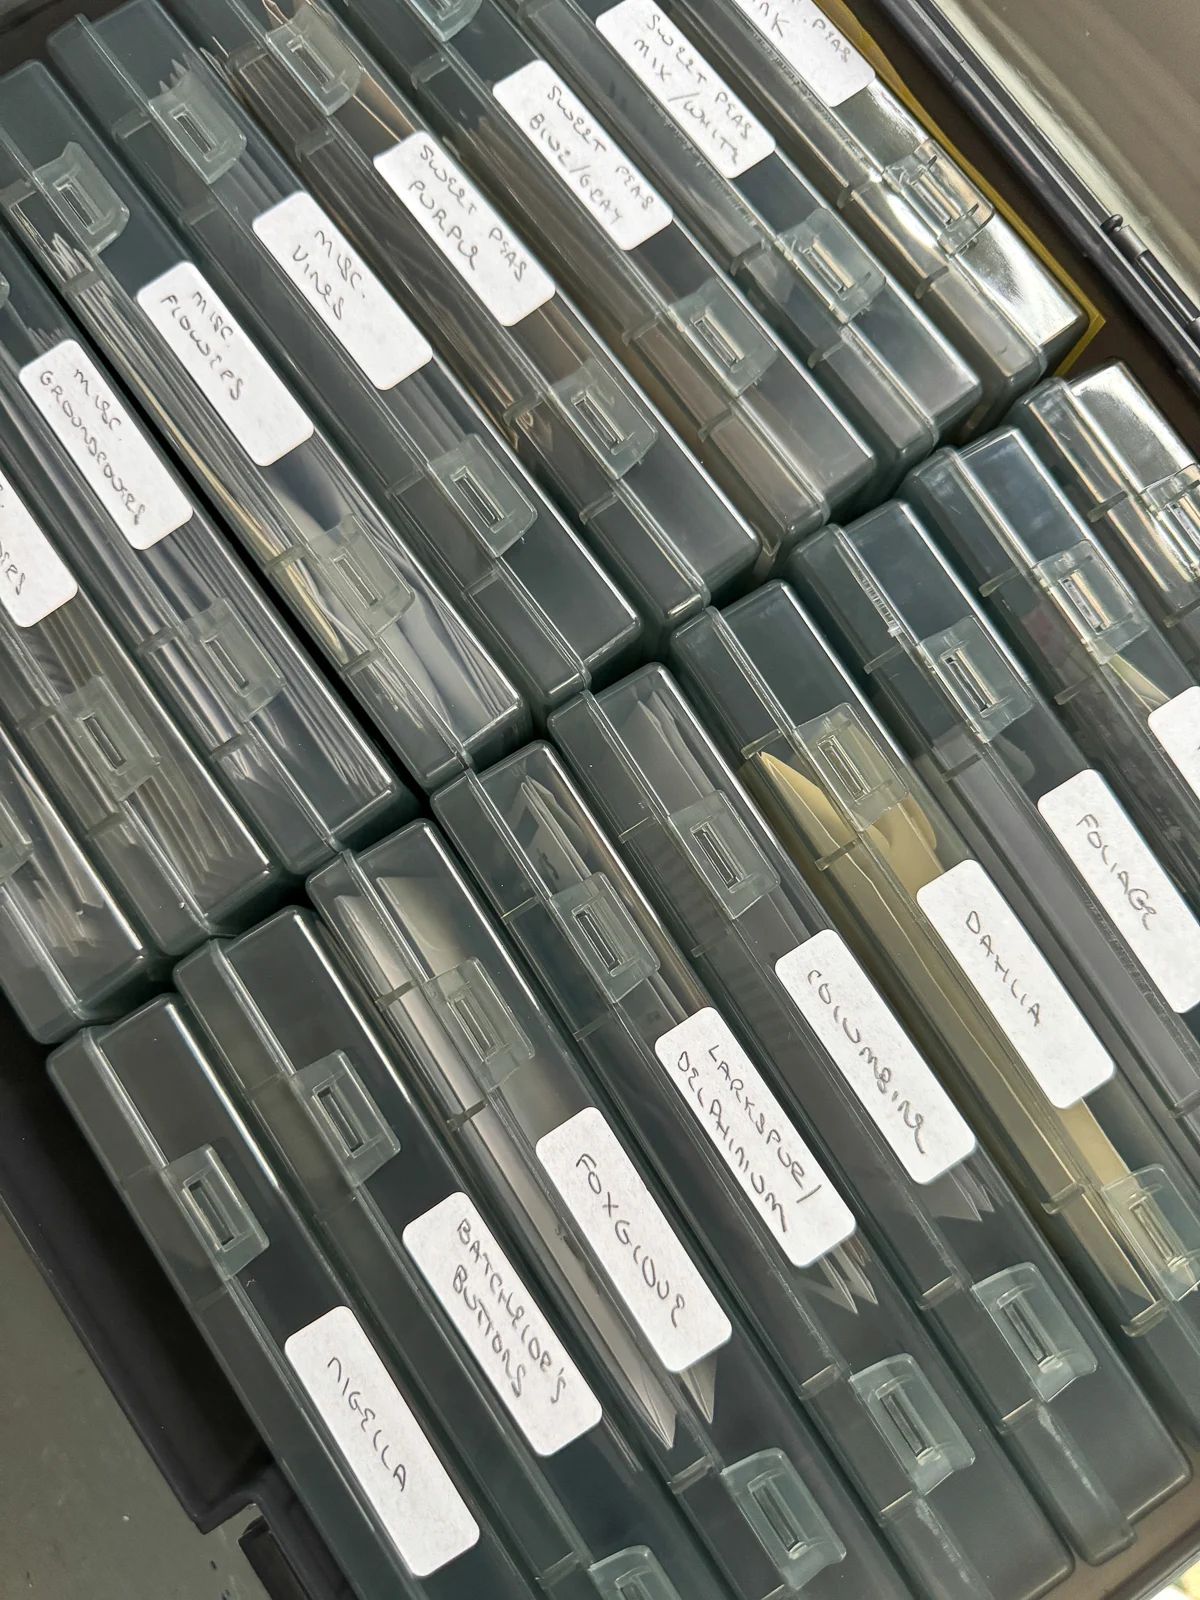 seeds stored in black photo storage case